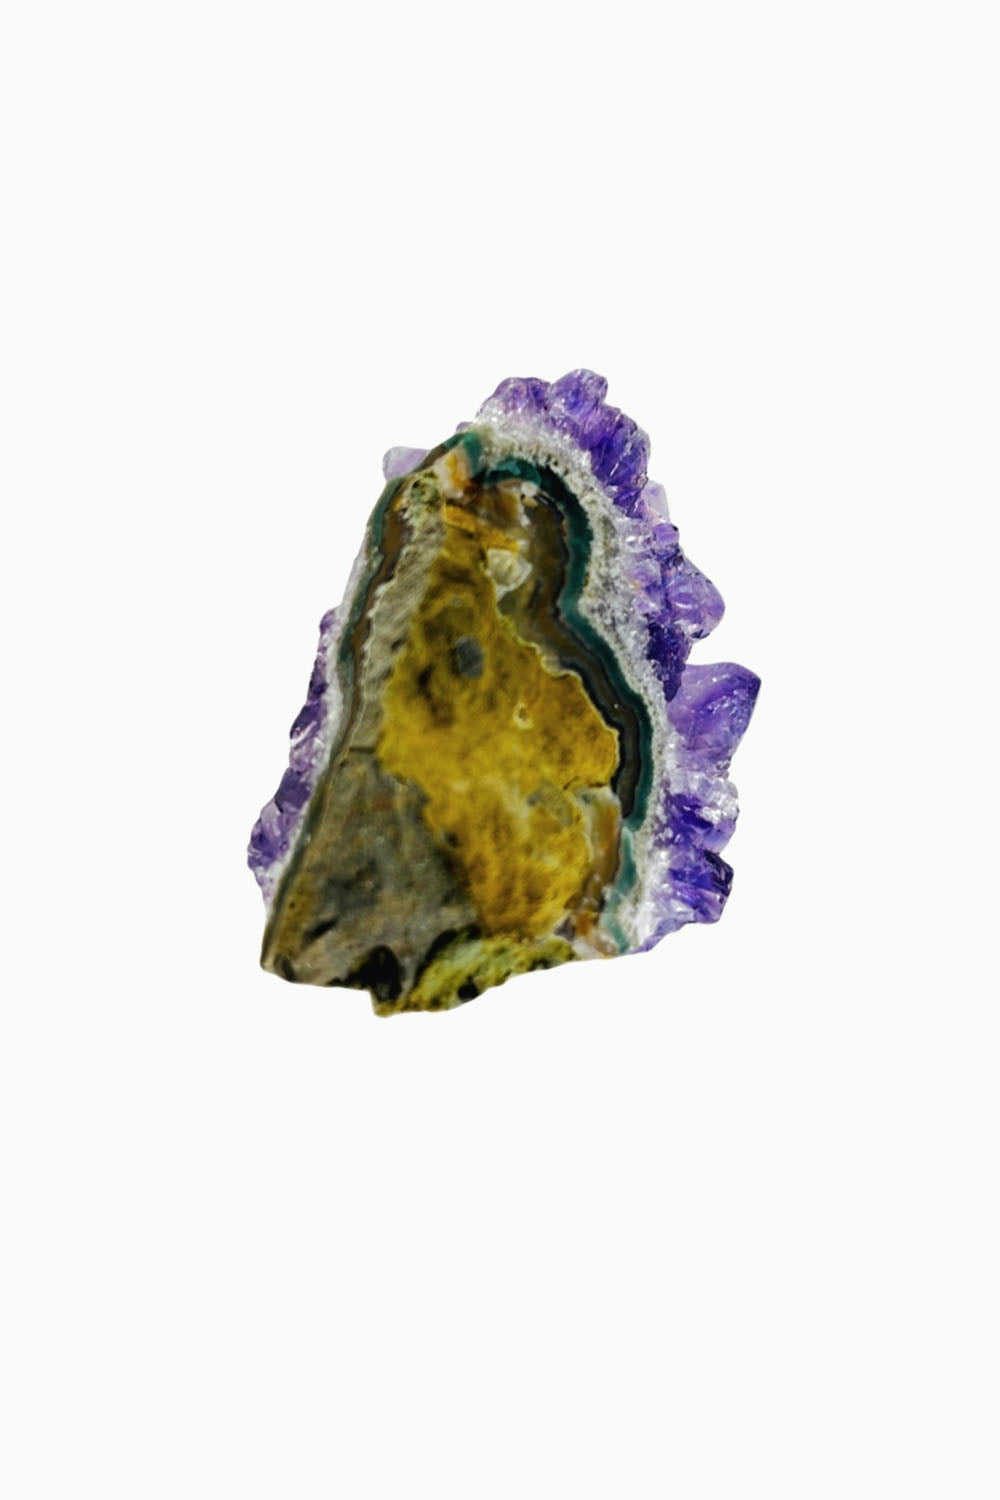 Amethyst Geode #5